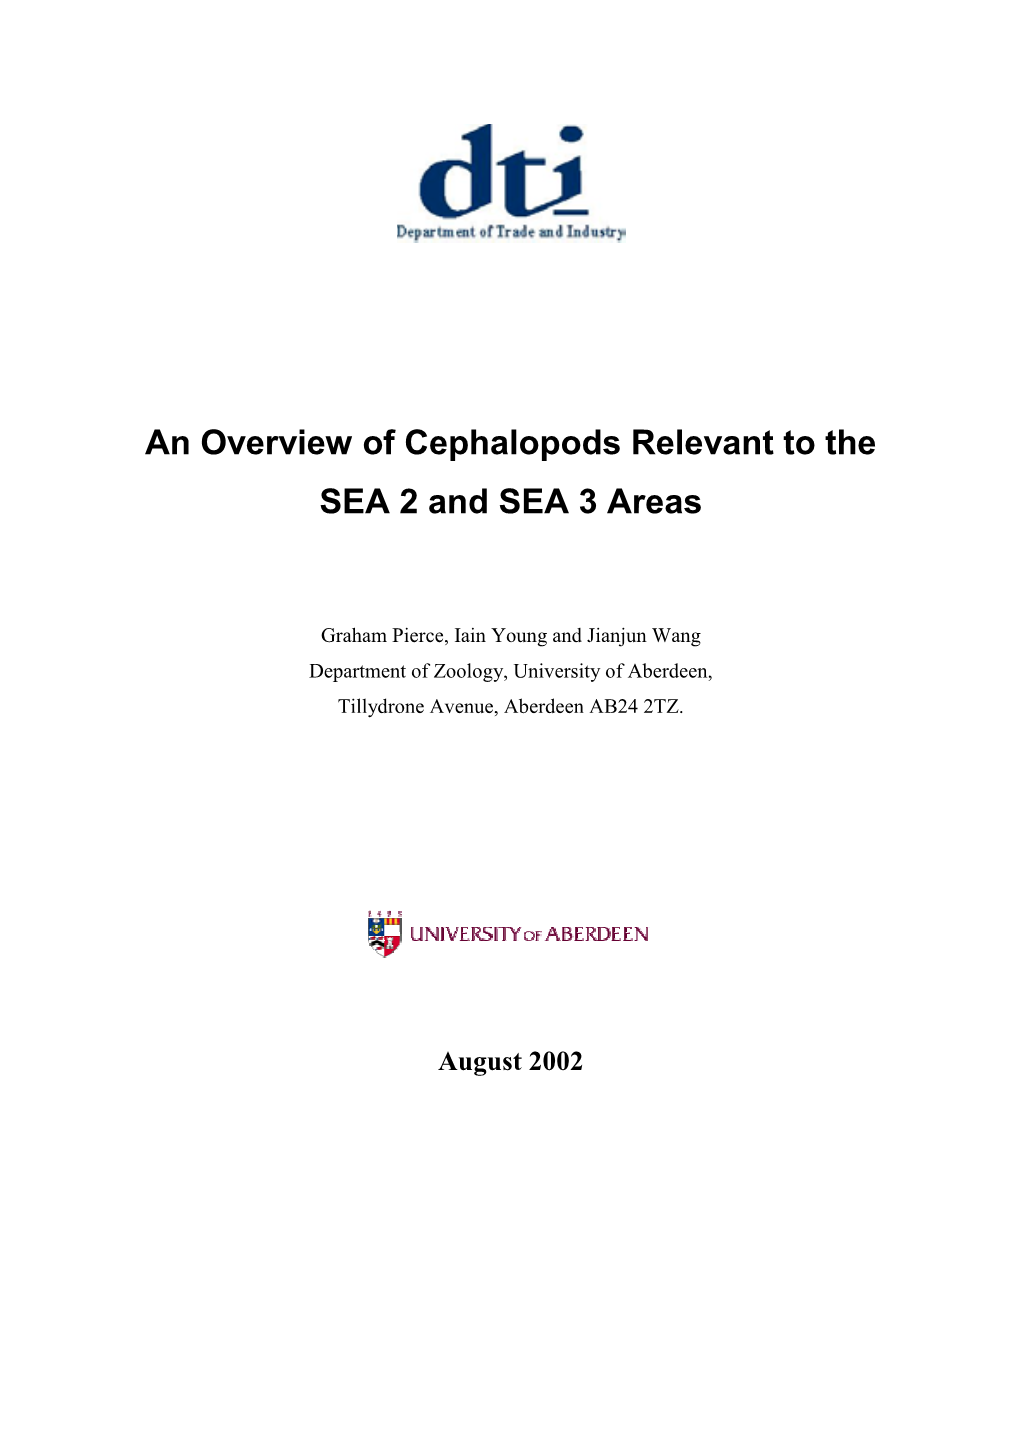 SEA3 - Cephalopods